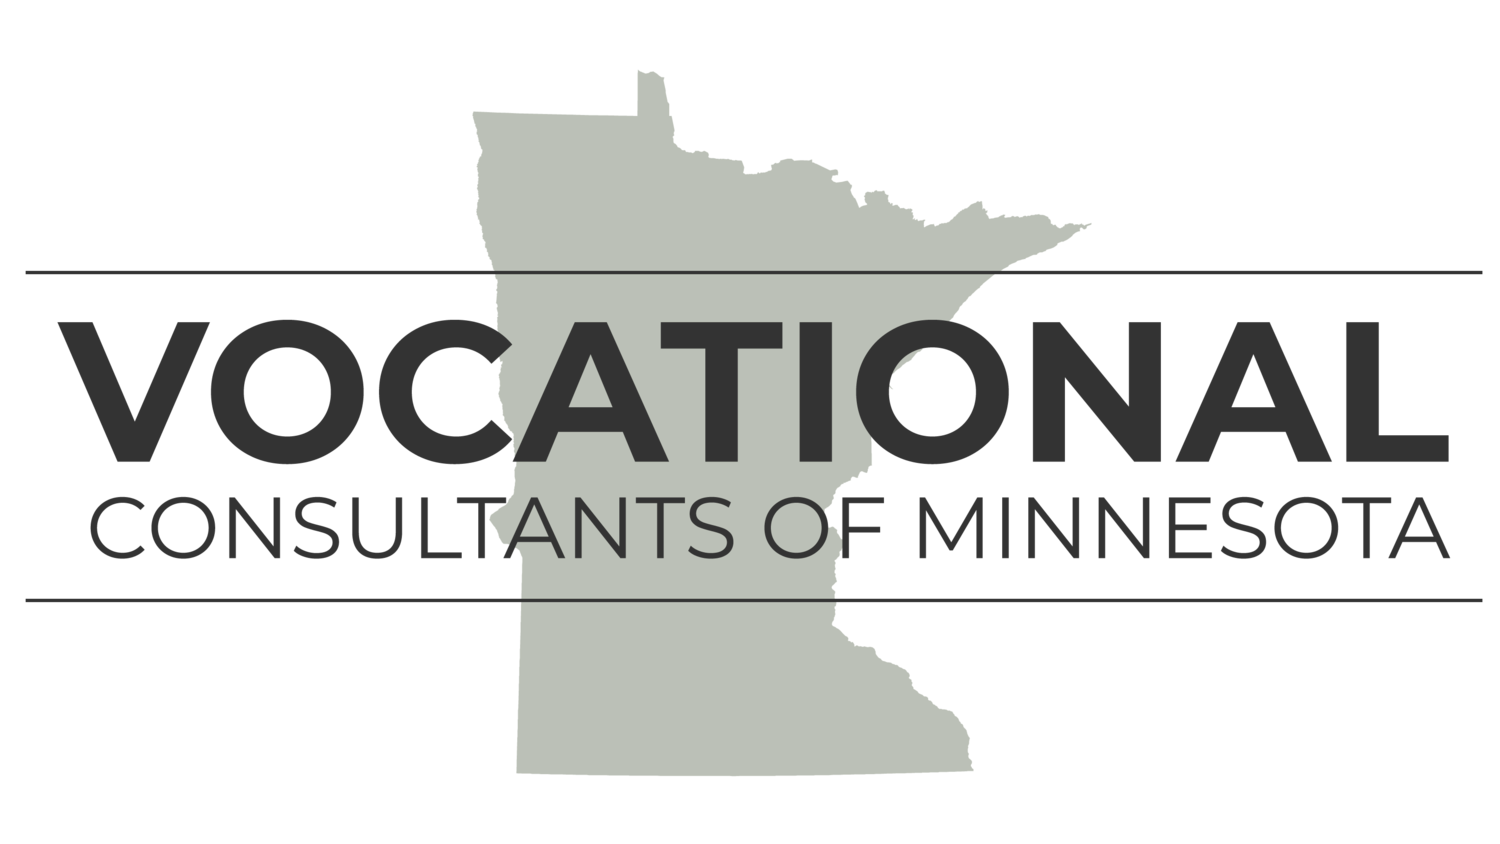 Vocational Consultants of Minnesota